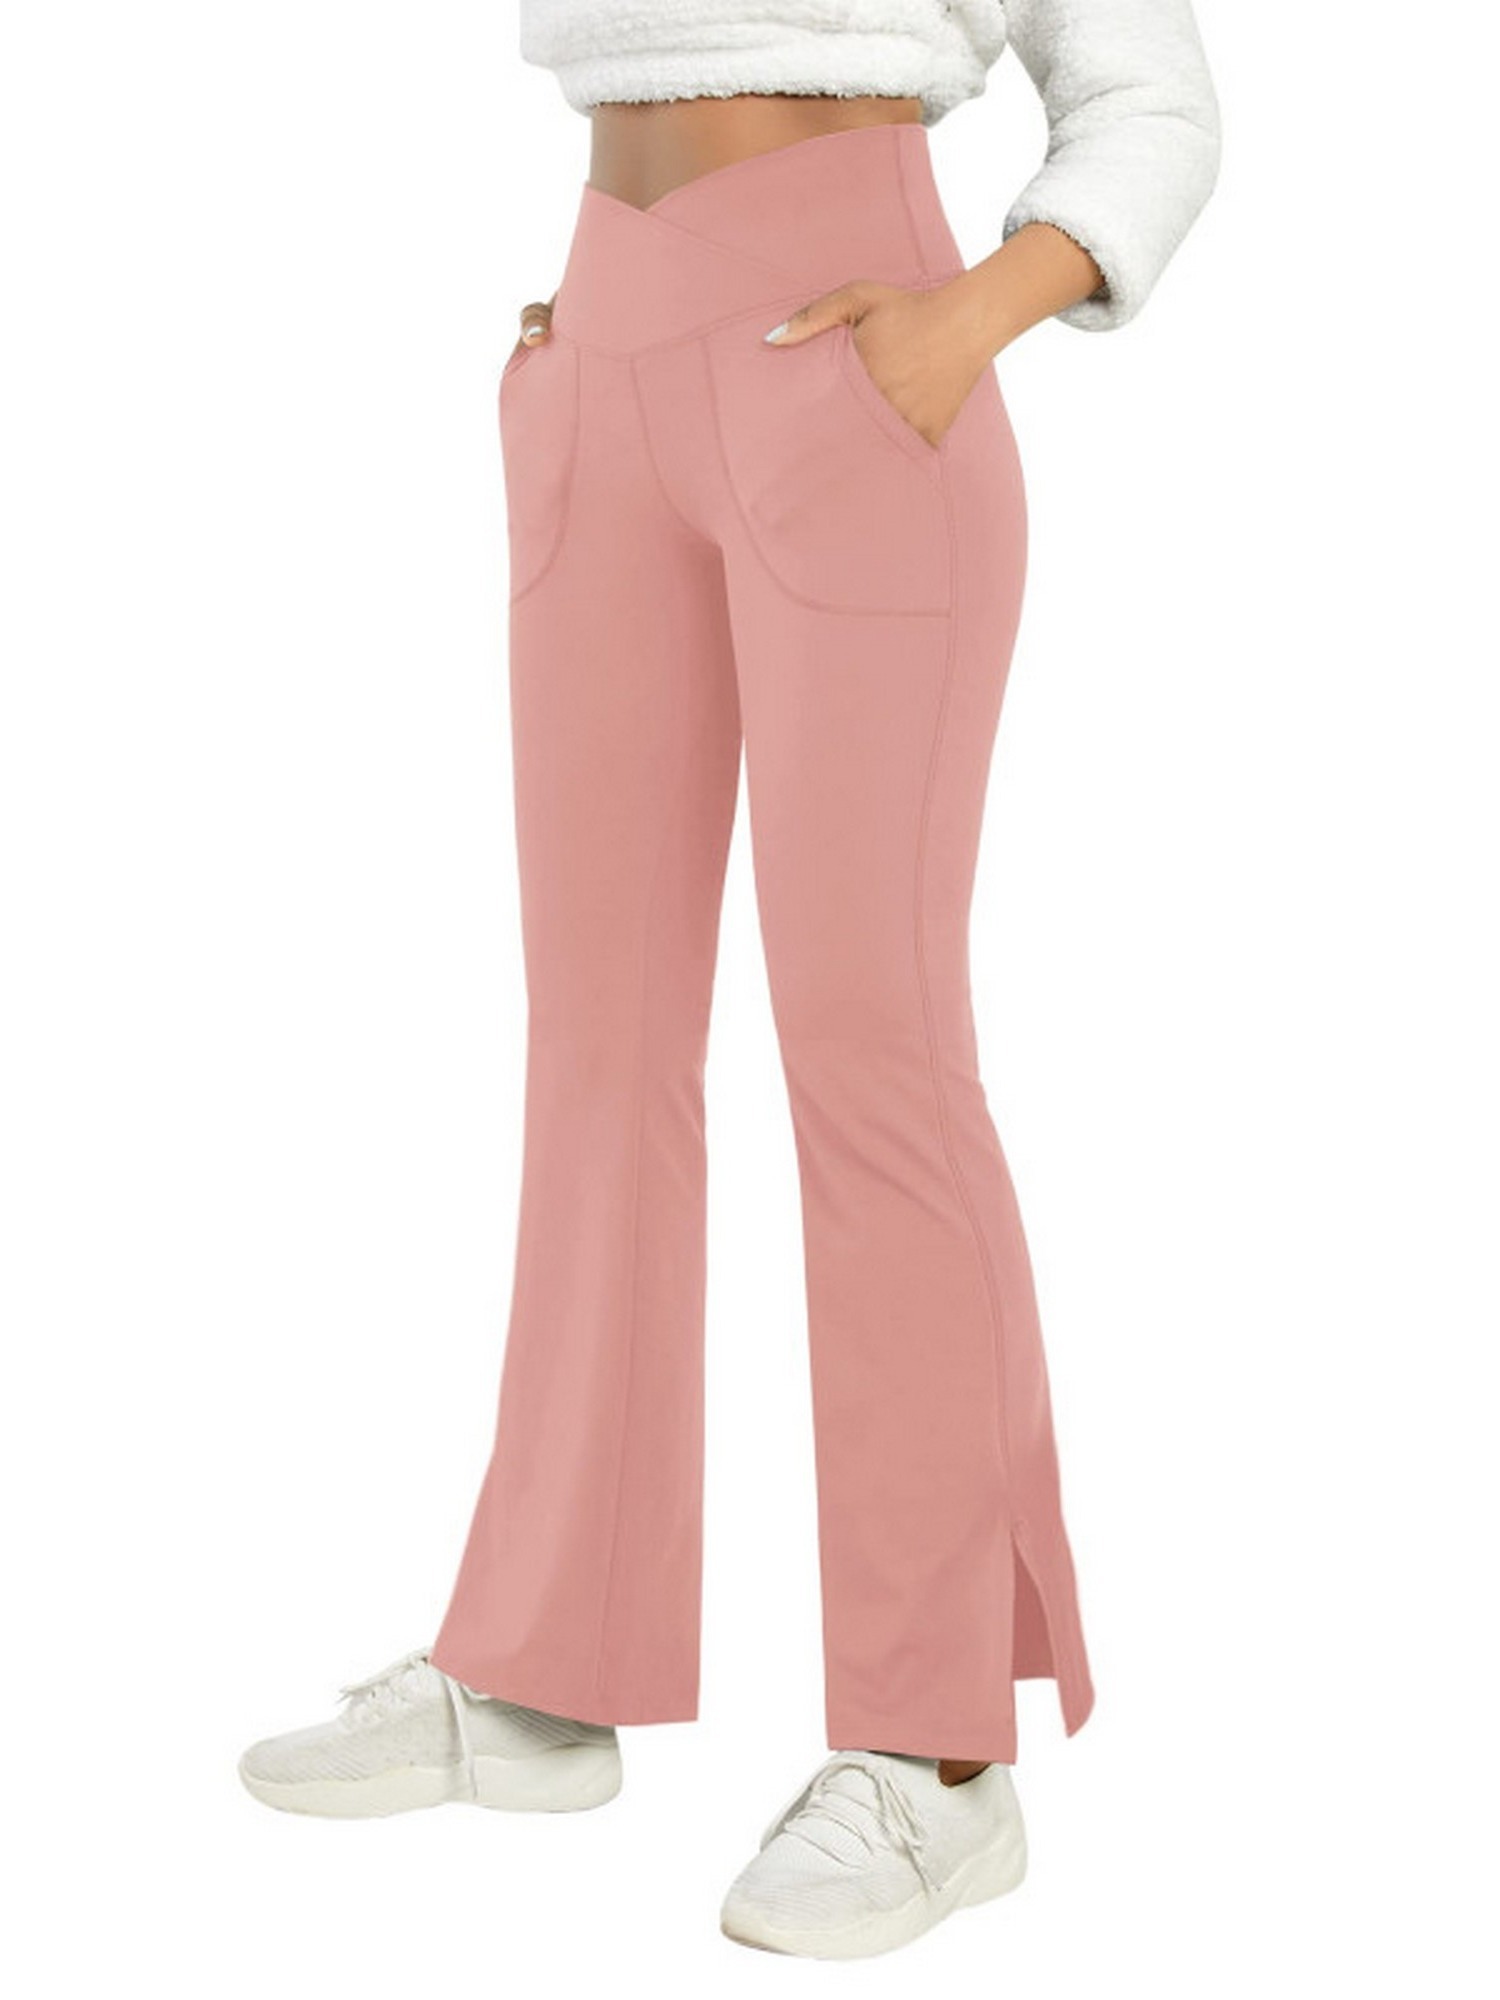 Long Pants For Women Women'S Trousers High Waist Casual Tight Bell Bottom  Pants Wide Leg Flared Pants Pink Xl 